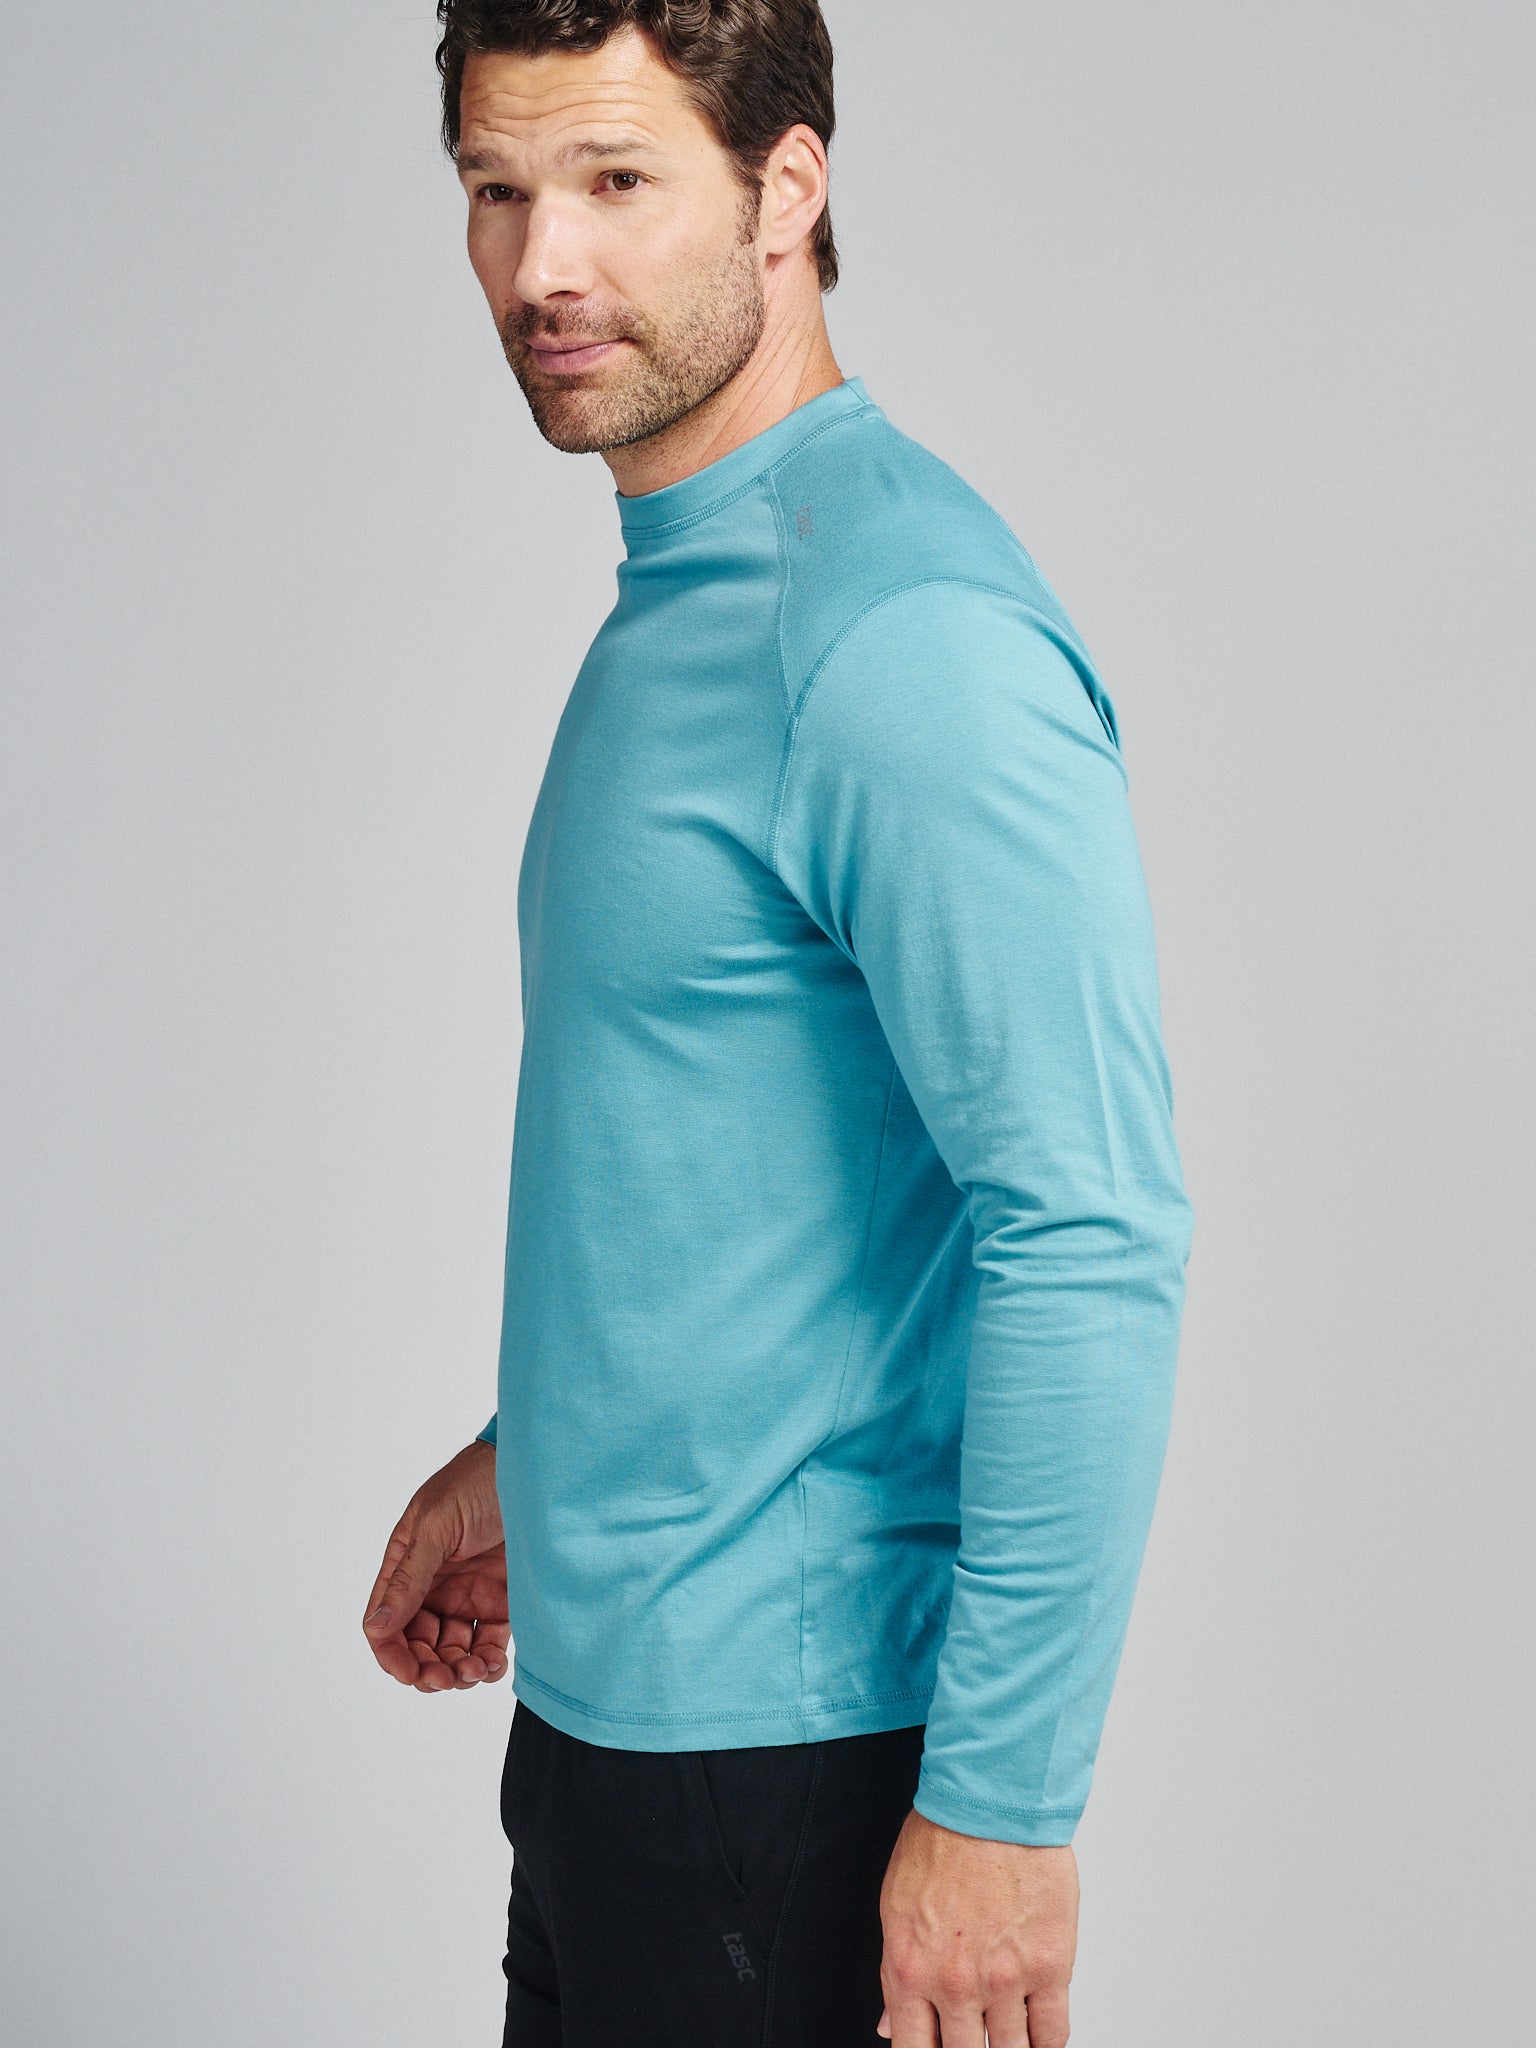 Tasc Performance Carrollton Fitness Long Sleeve Shirt in Teal Green | Men's Regular Size Medium | Cotton | Stitch Fix